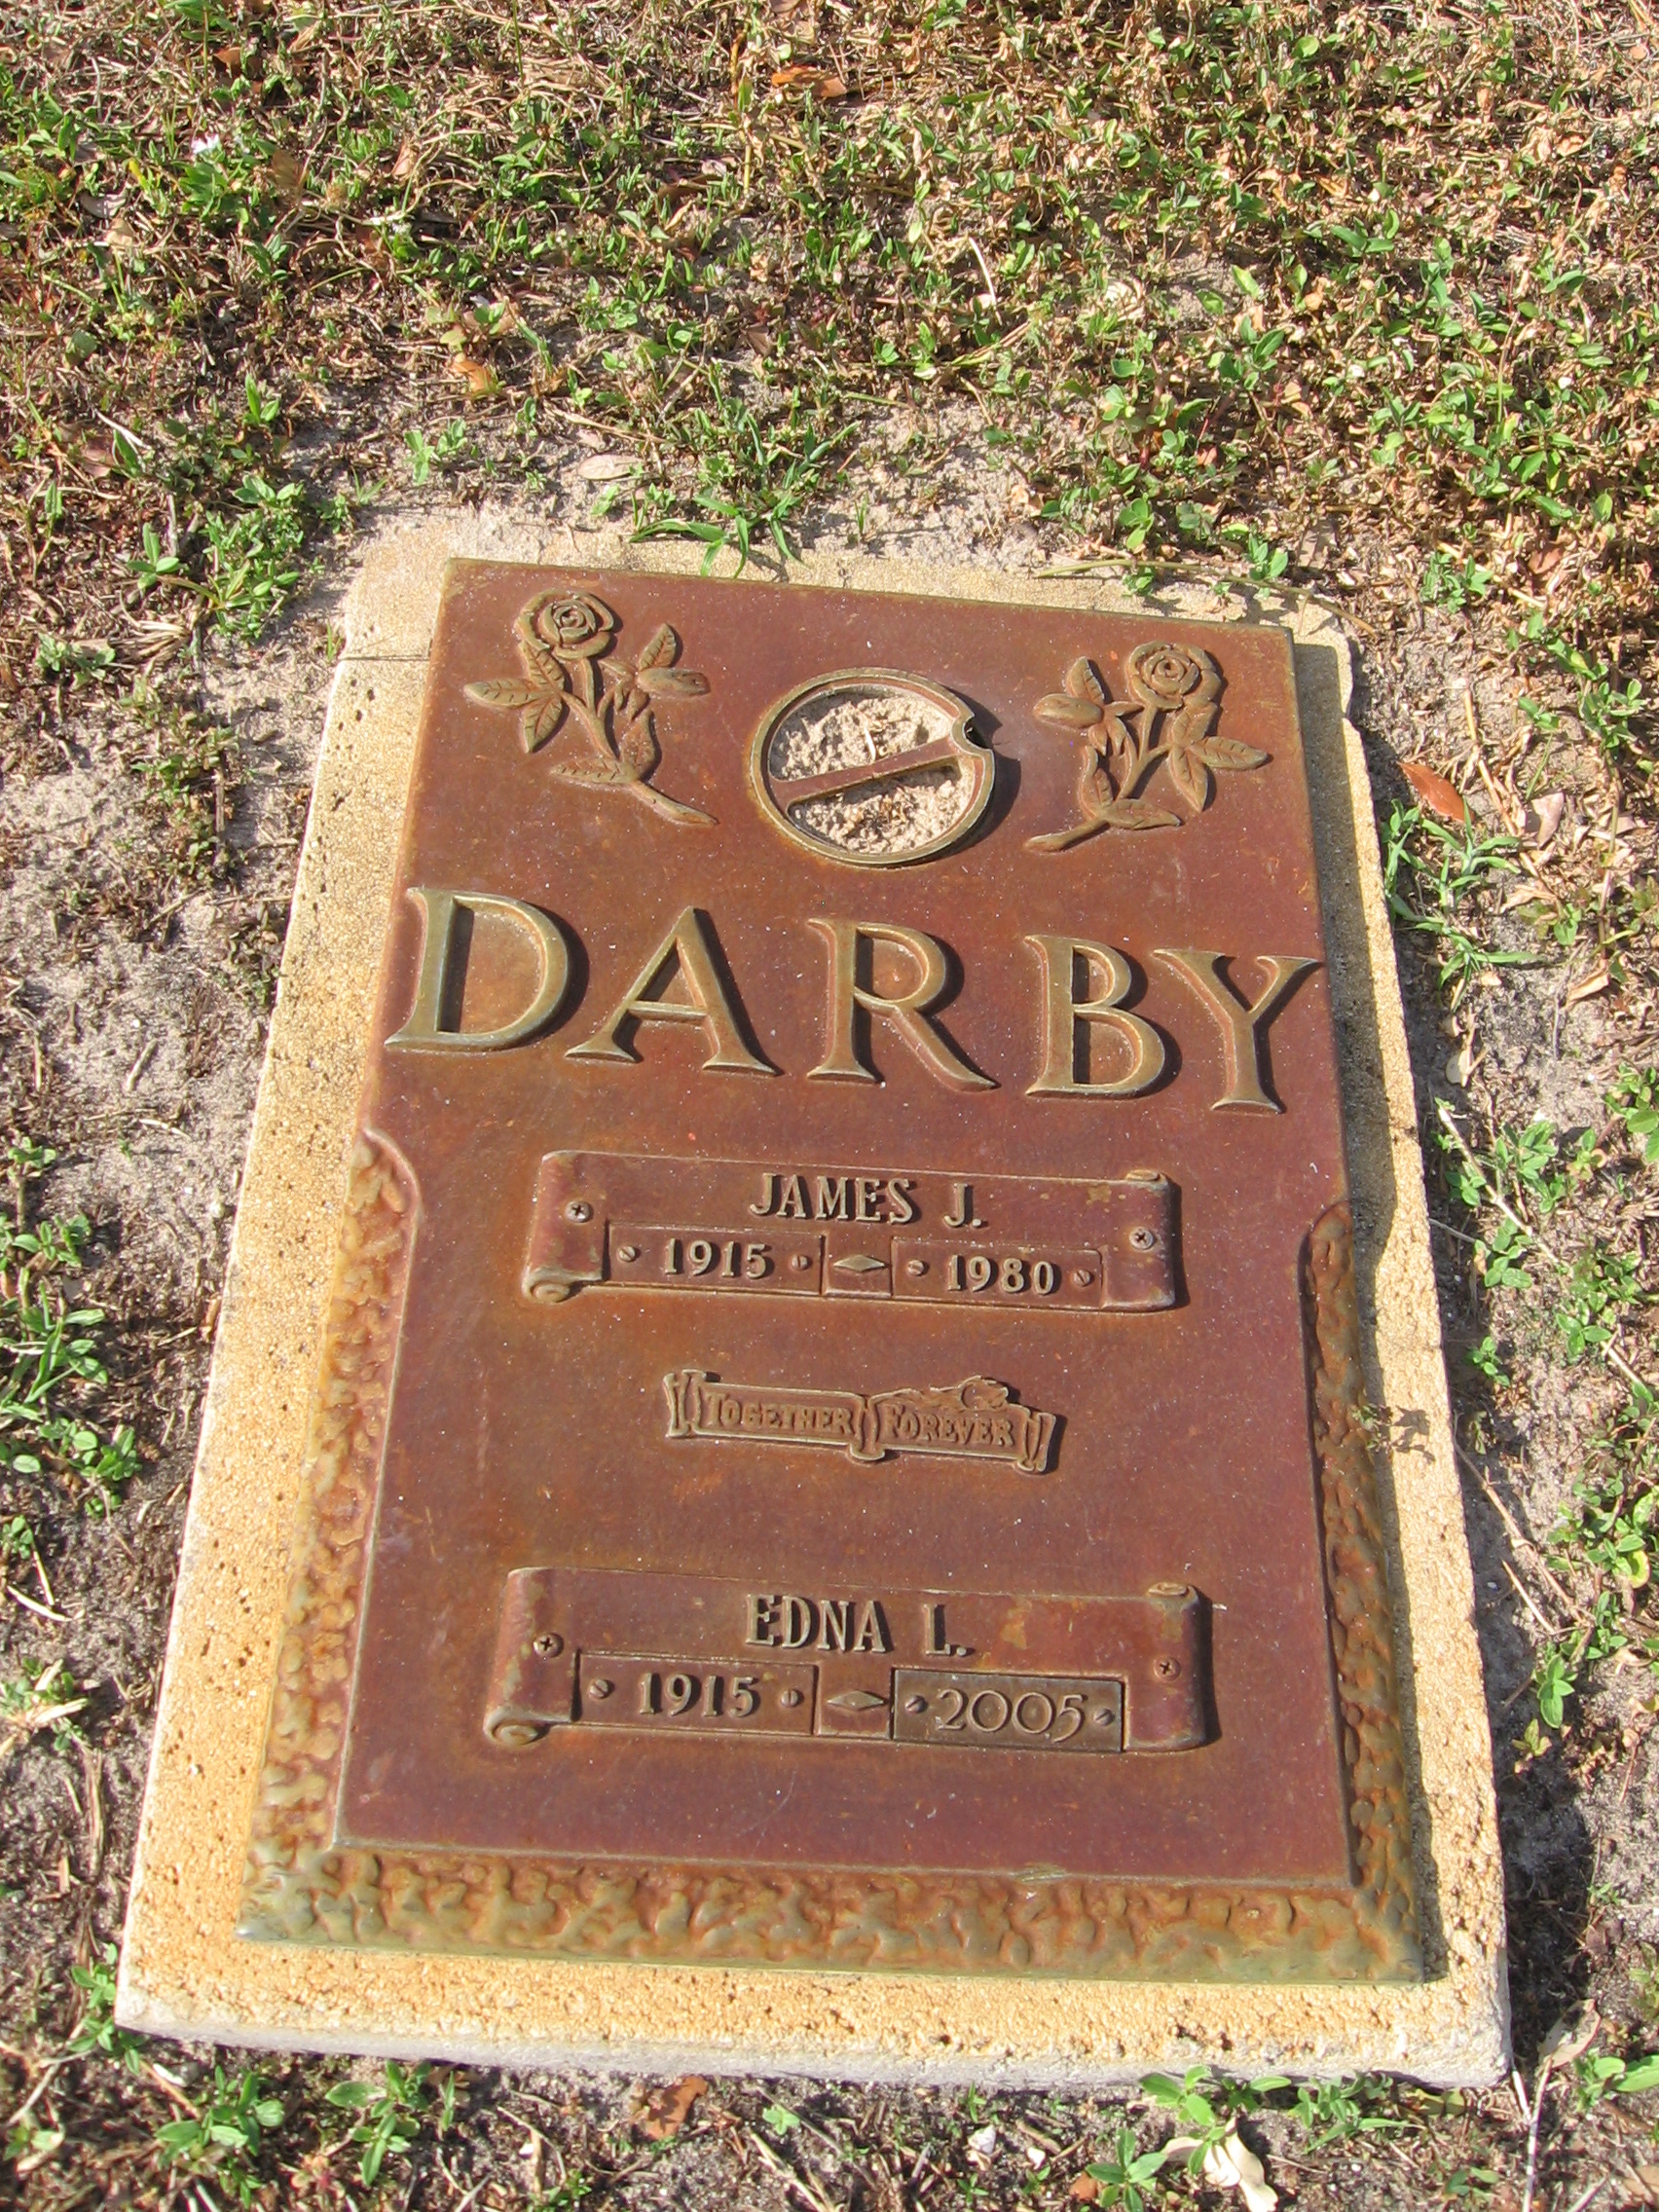 James J Darby